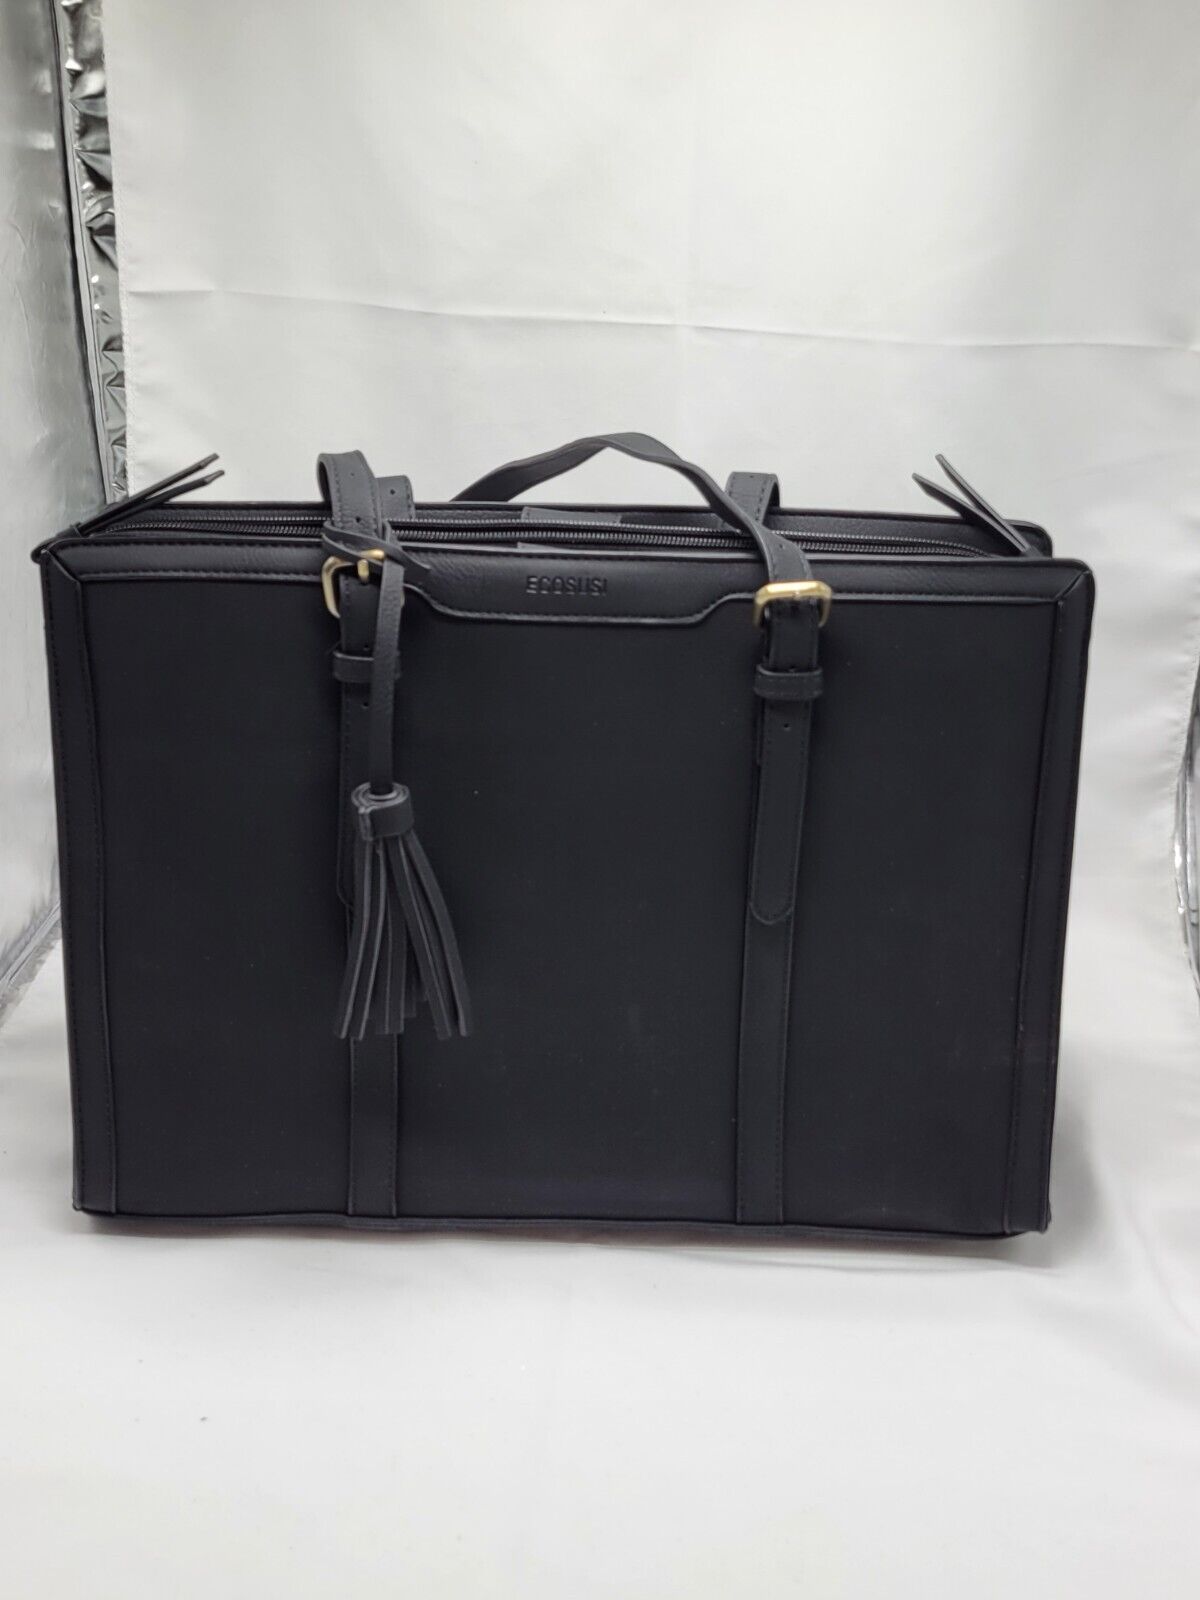 NEW PRICE Ecosusi Black Leather Laptop Messenger Bag W Straps Eco Friendly 